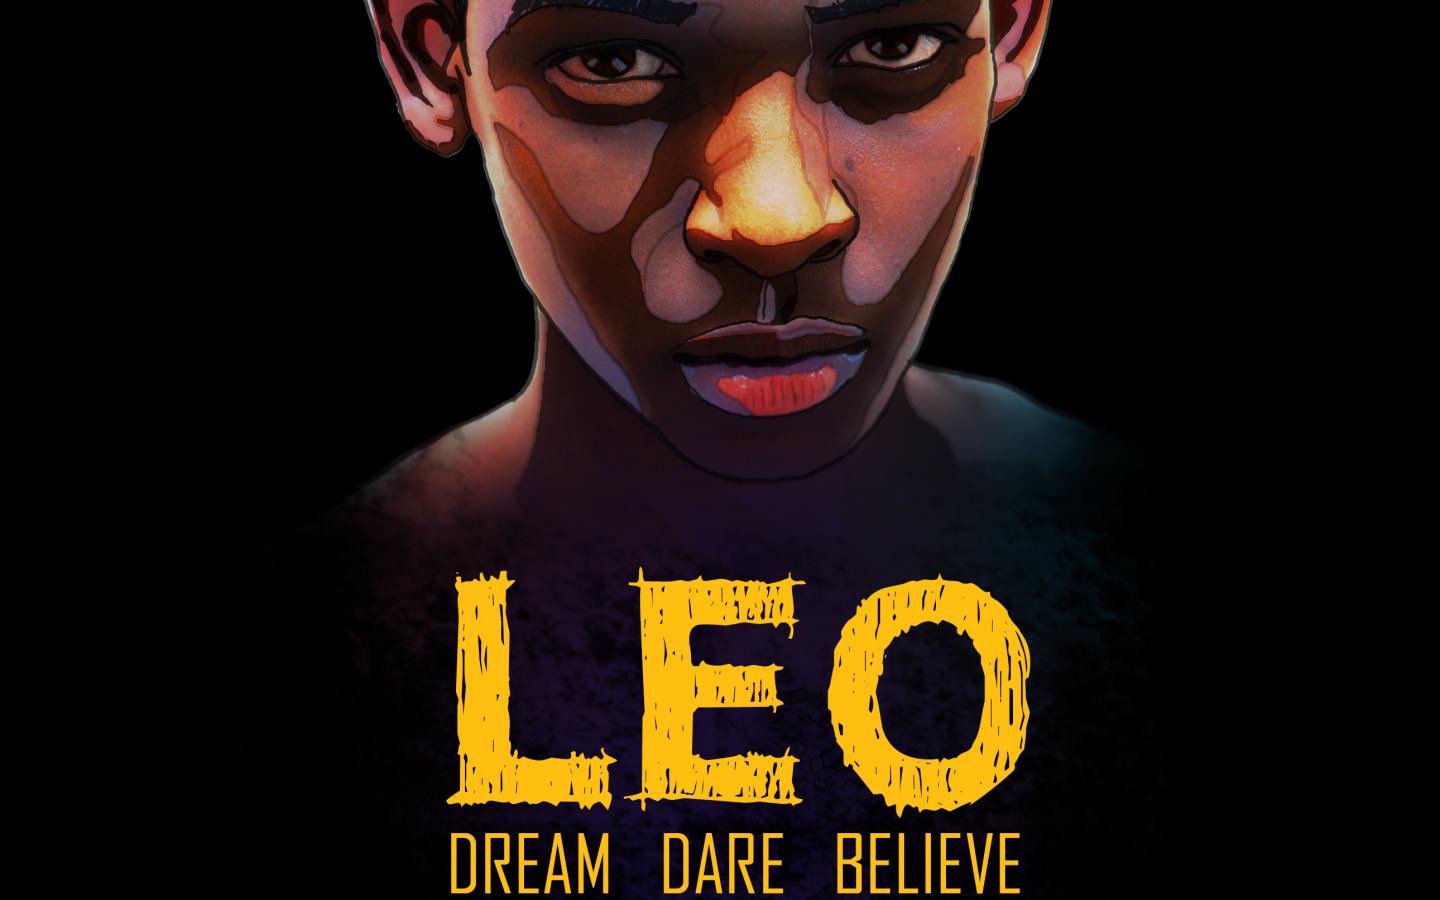 LEO: Dream, dare, believe